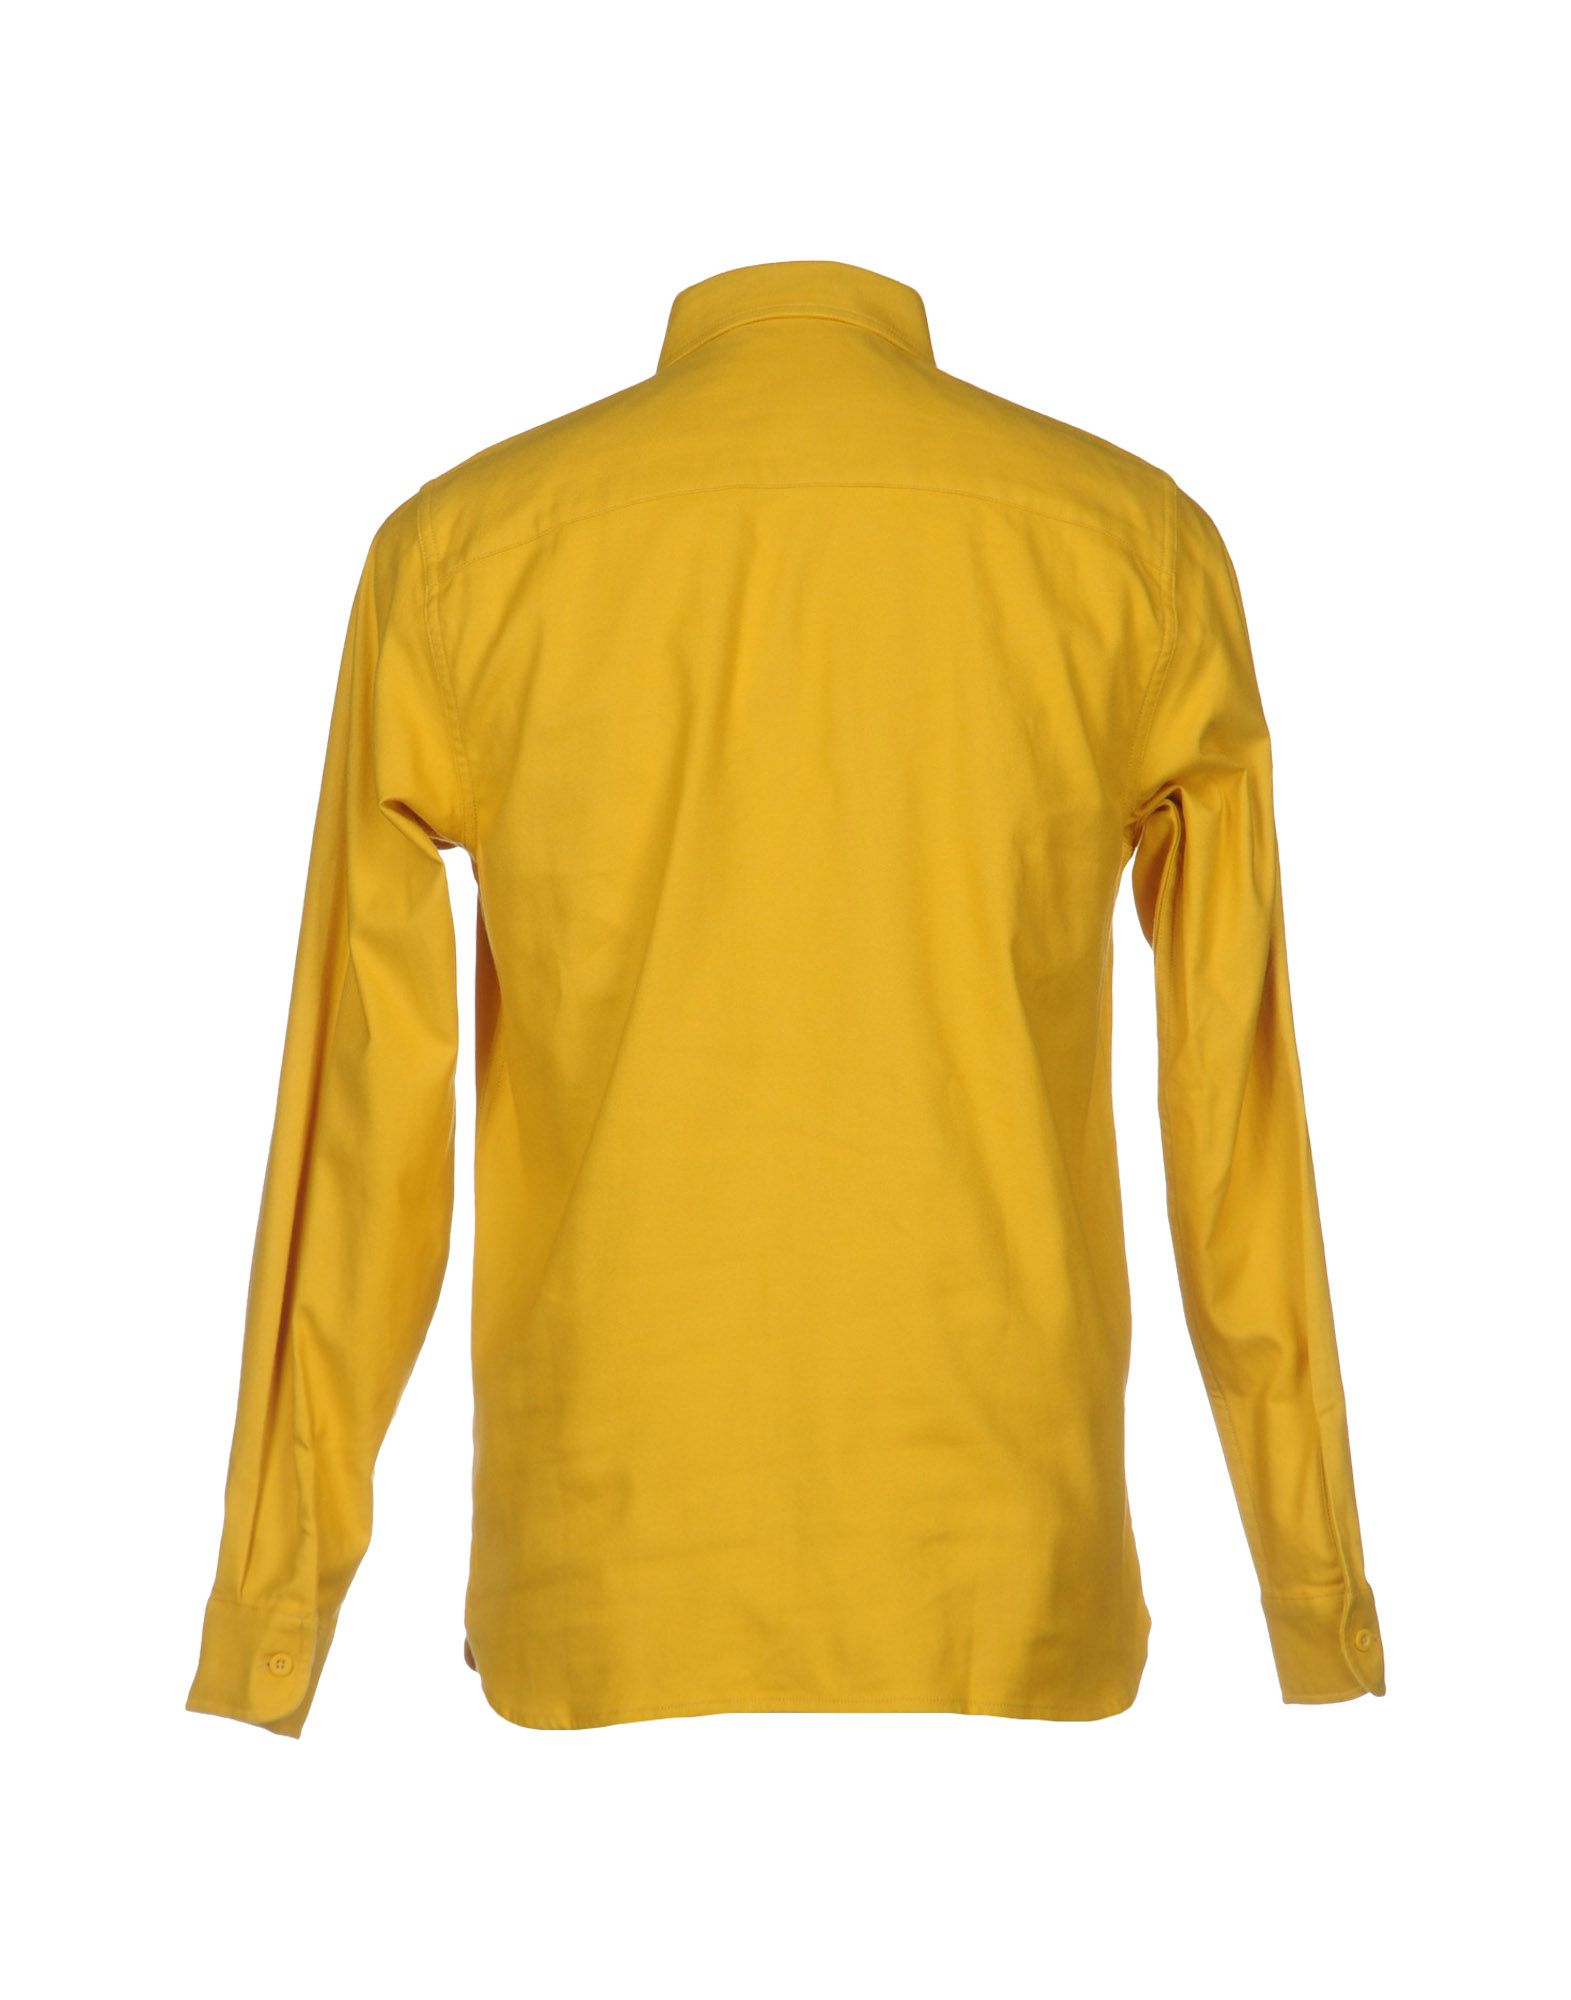 Carhartt Shirt in Yellow for Men